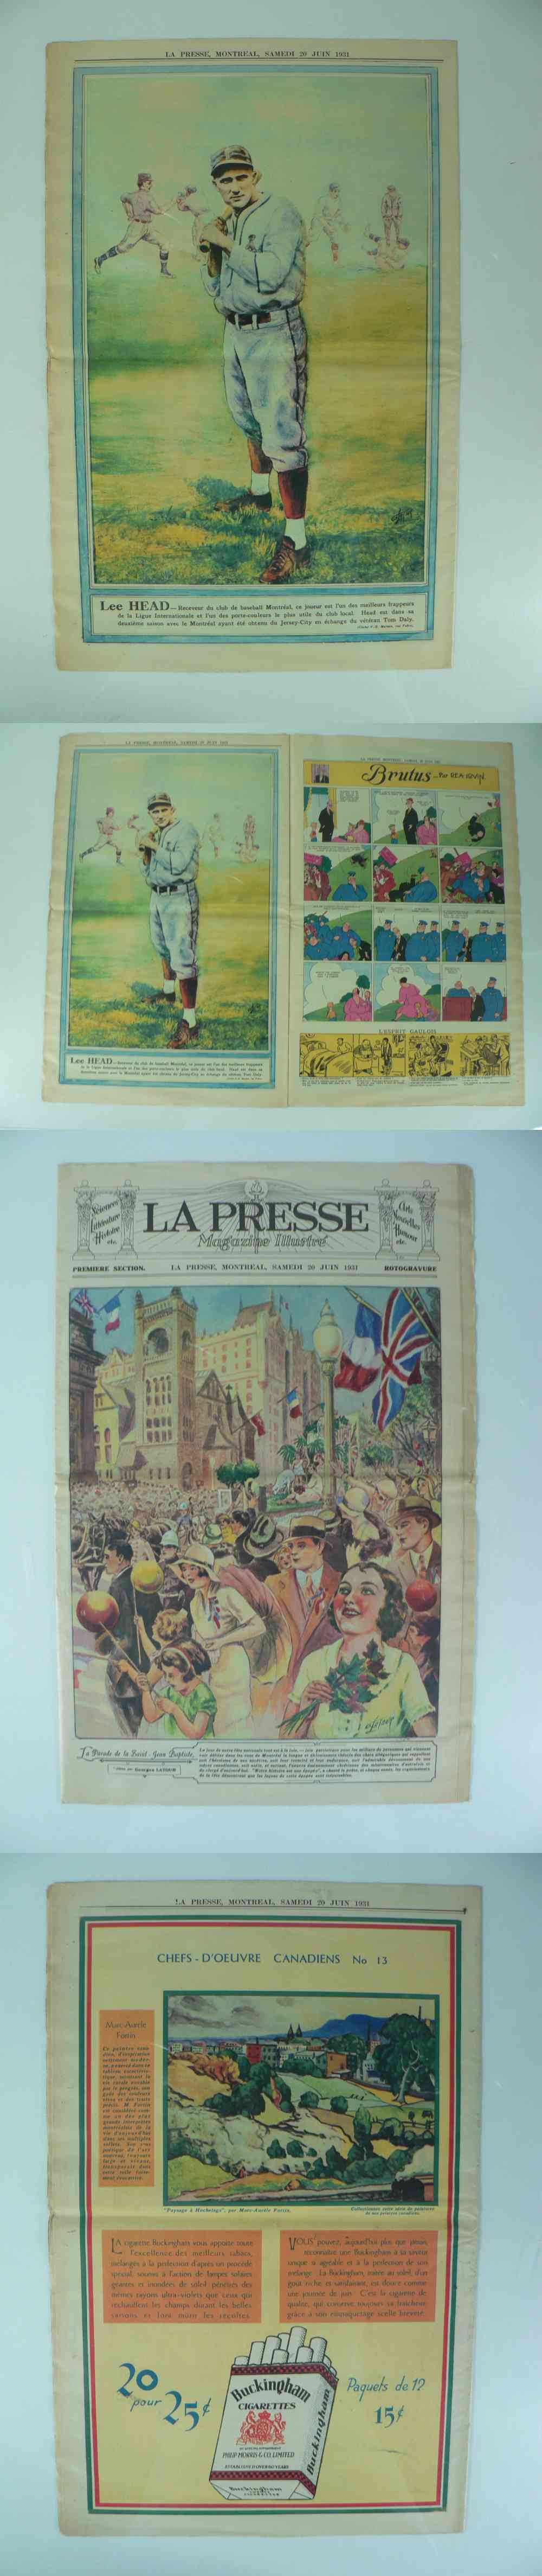 1931 LA PRESSE FULL NEWSPAPER INSIDE PHOTO L. HEAD photo